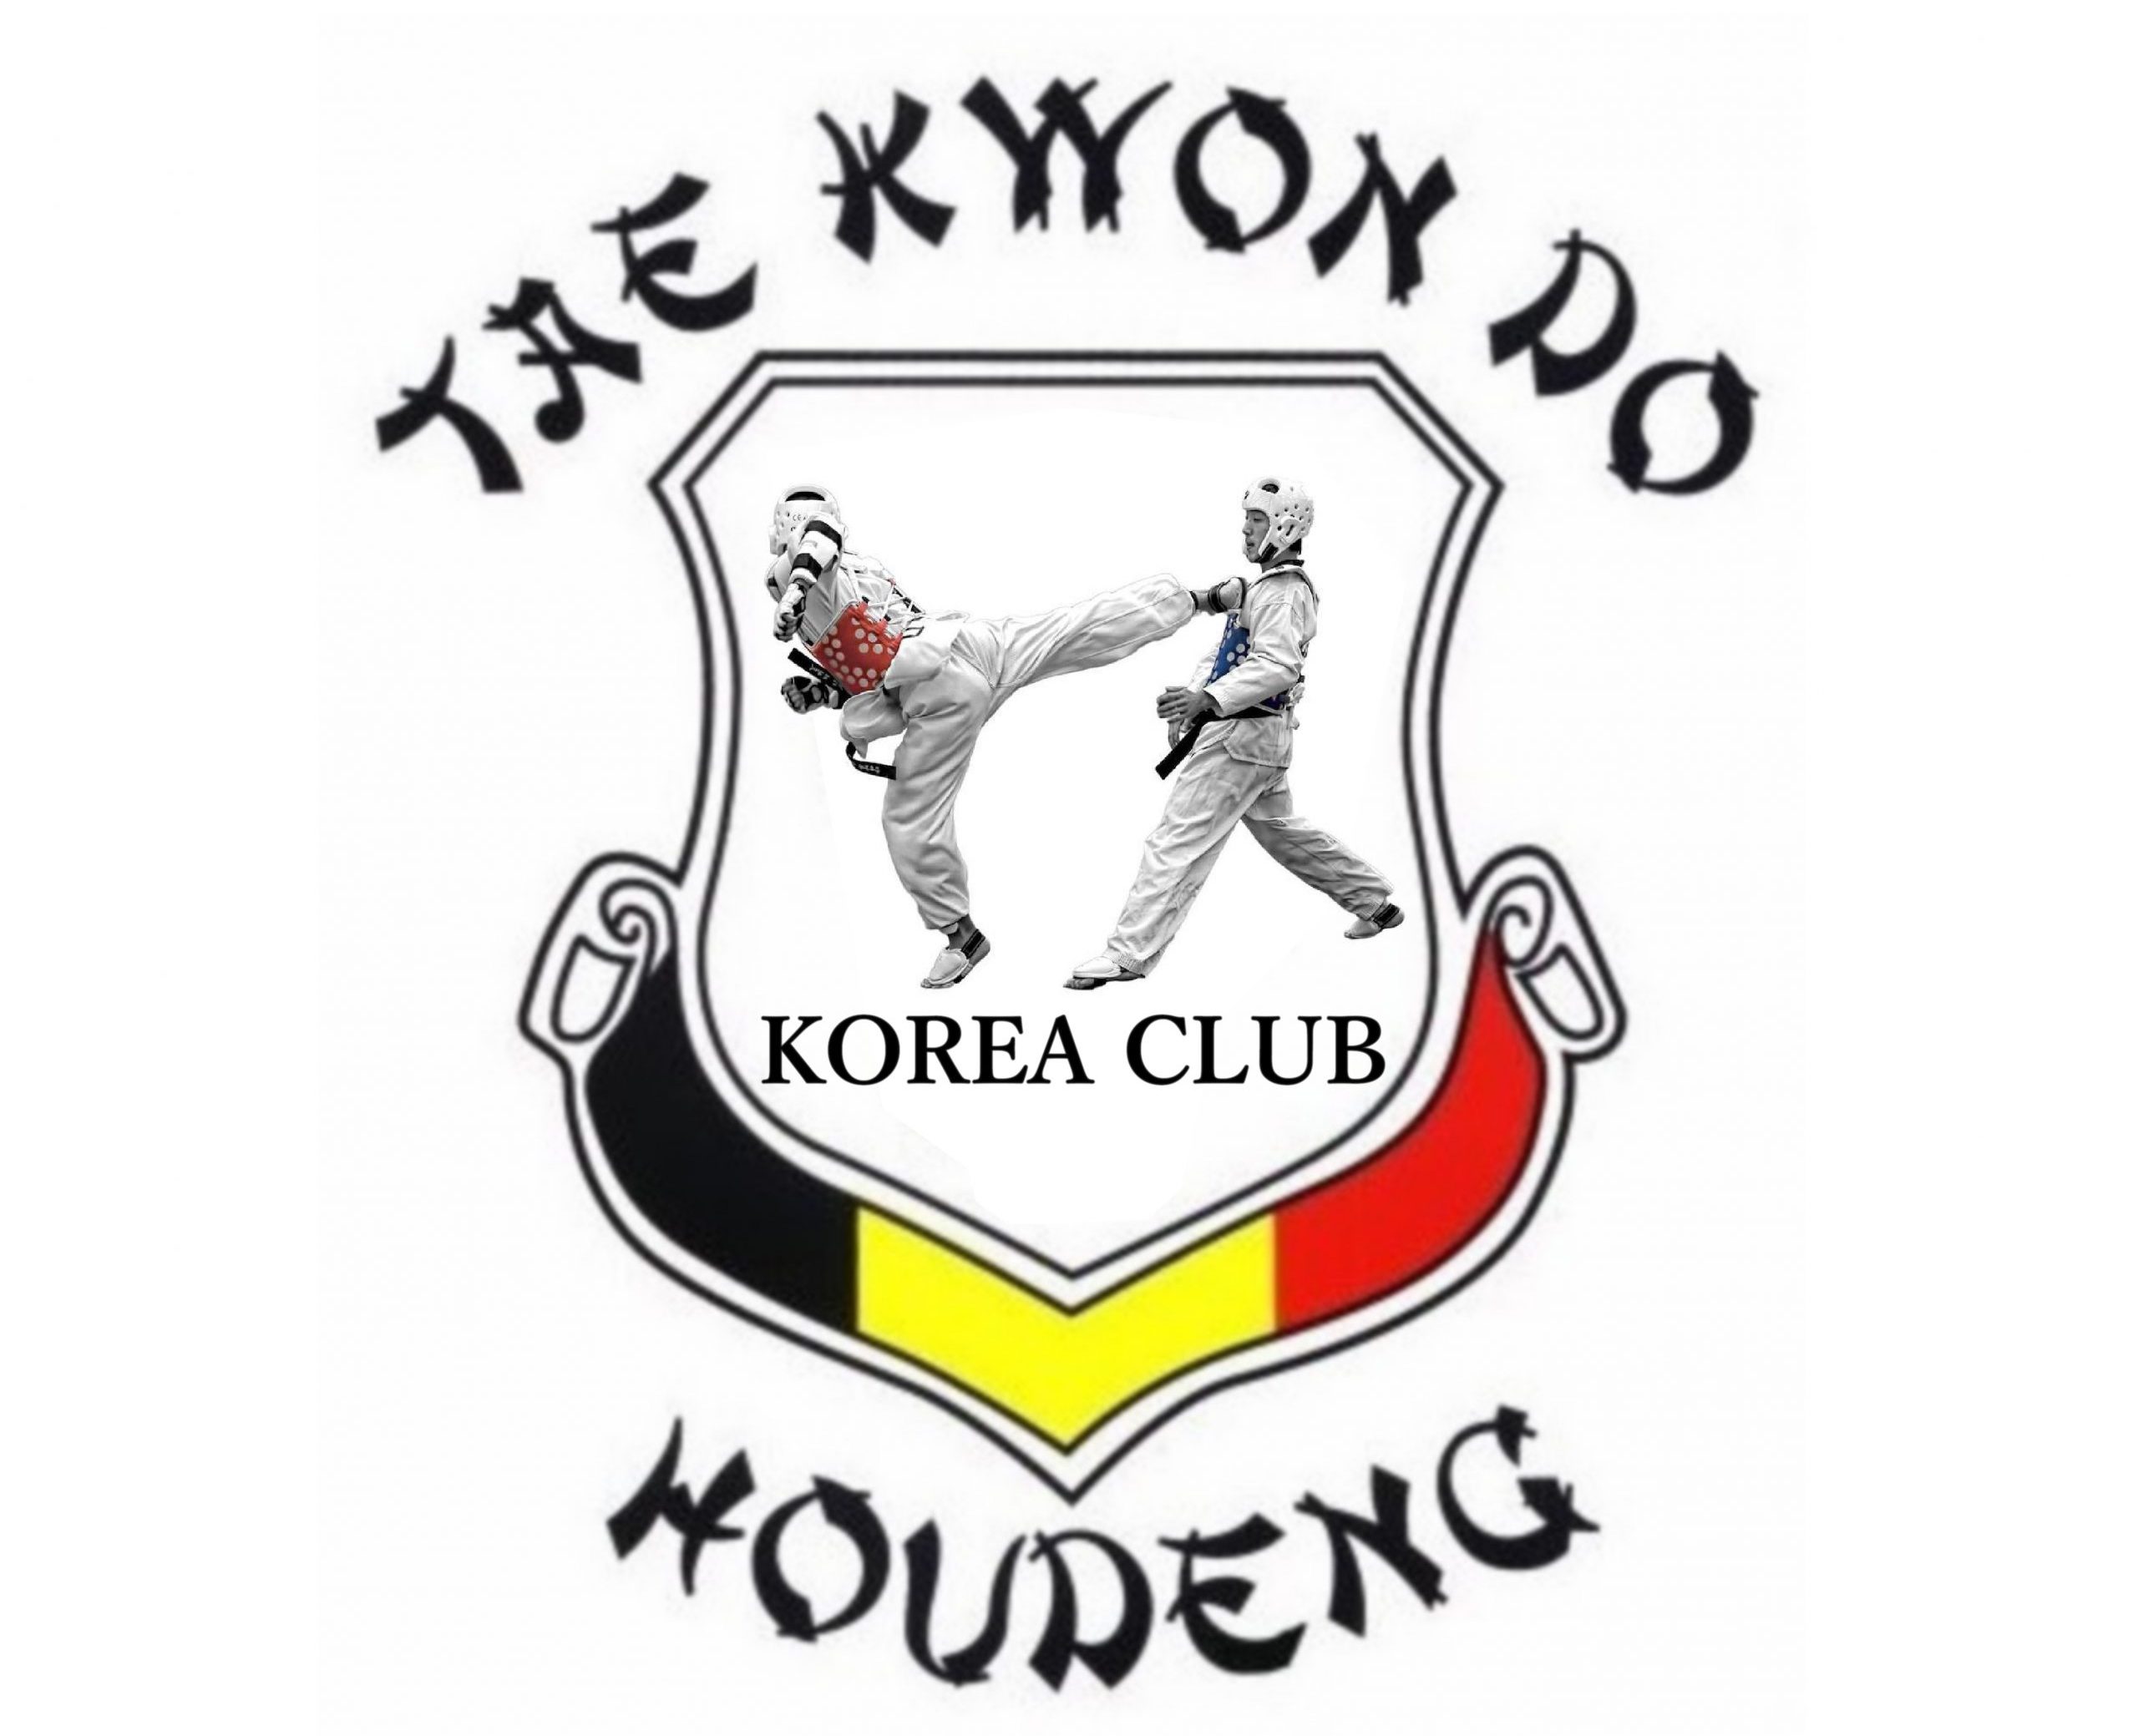 Korea Club Houdeng